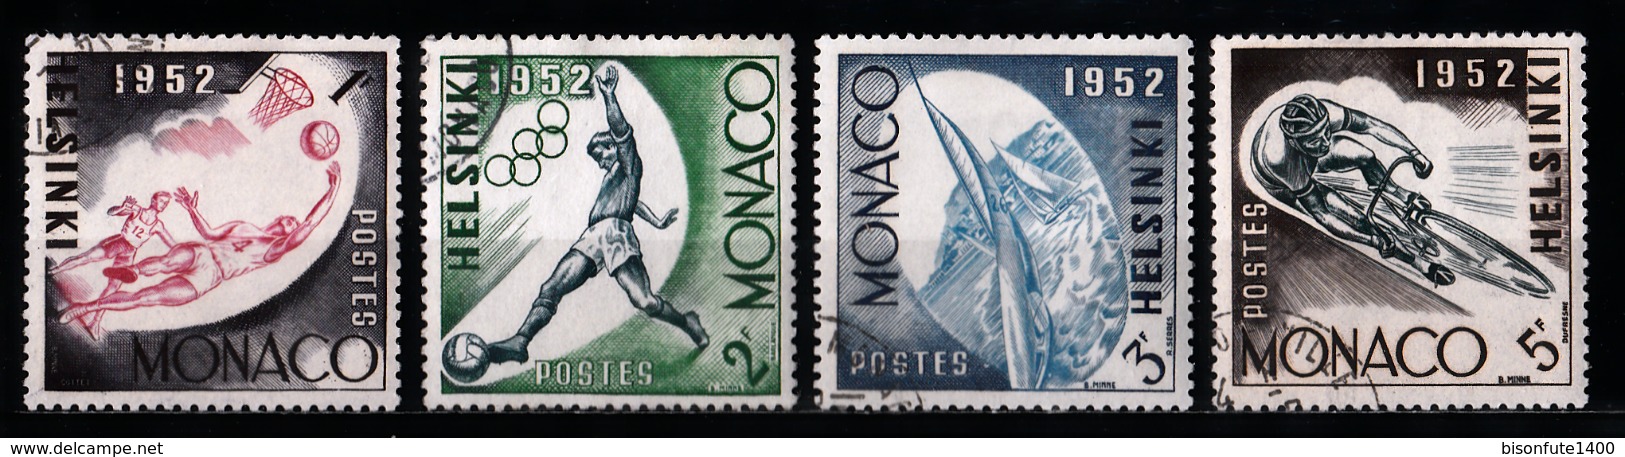 Monaco 1952 : Timbres Yvert & Tellier N° 386 - 387 - 388 - 389 - 390 Et 391. - Usados